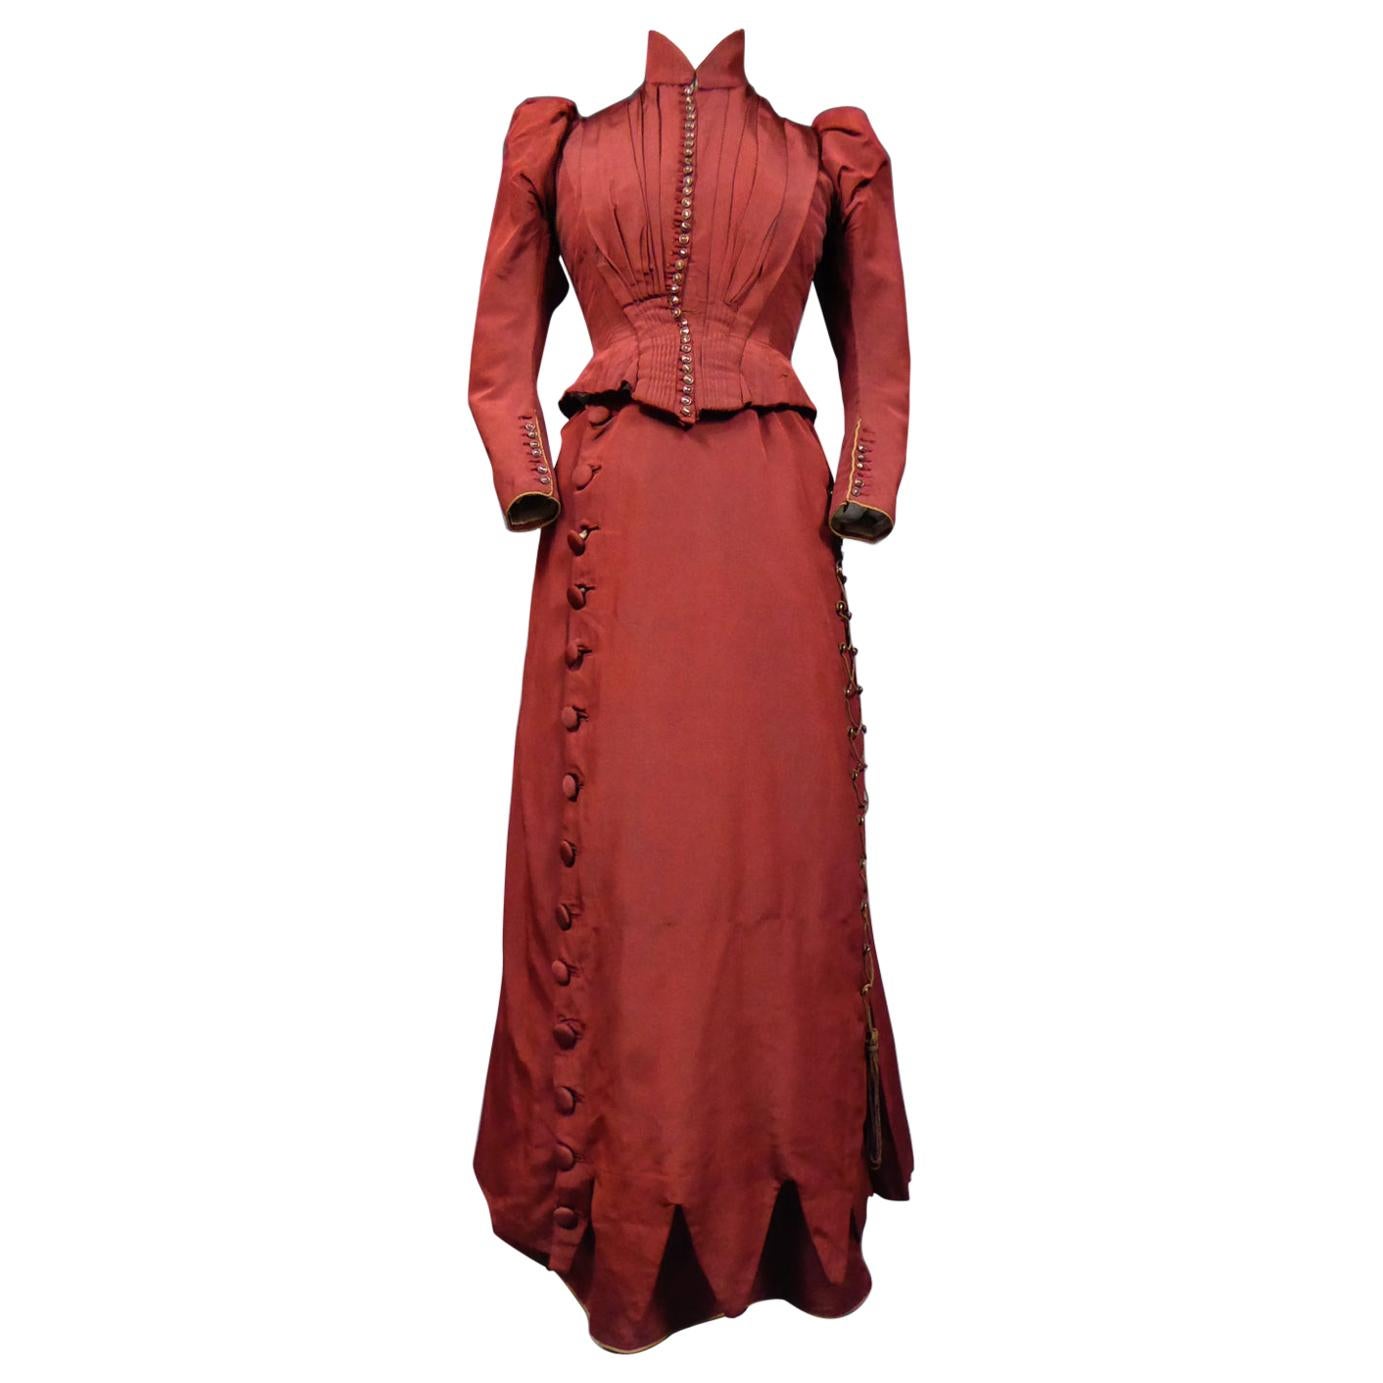 A Edwardian Faille Silk Amazon Bodice and Skirt Set  - England late 19th century